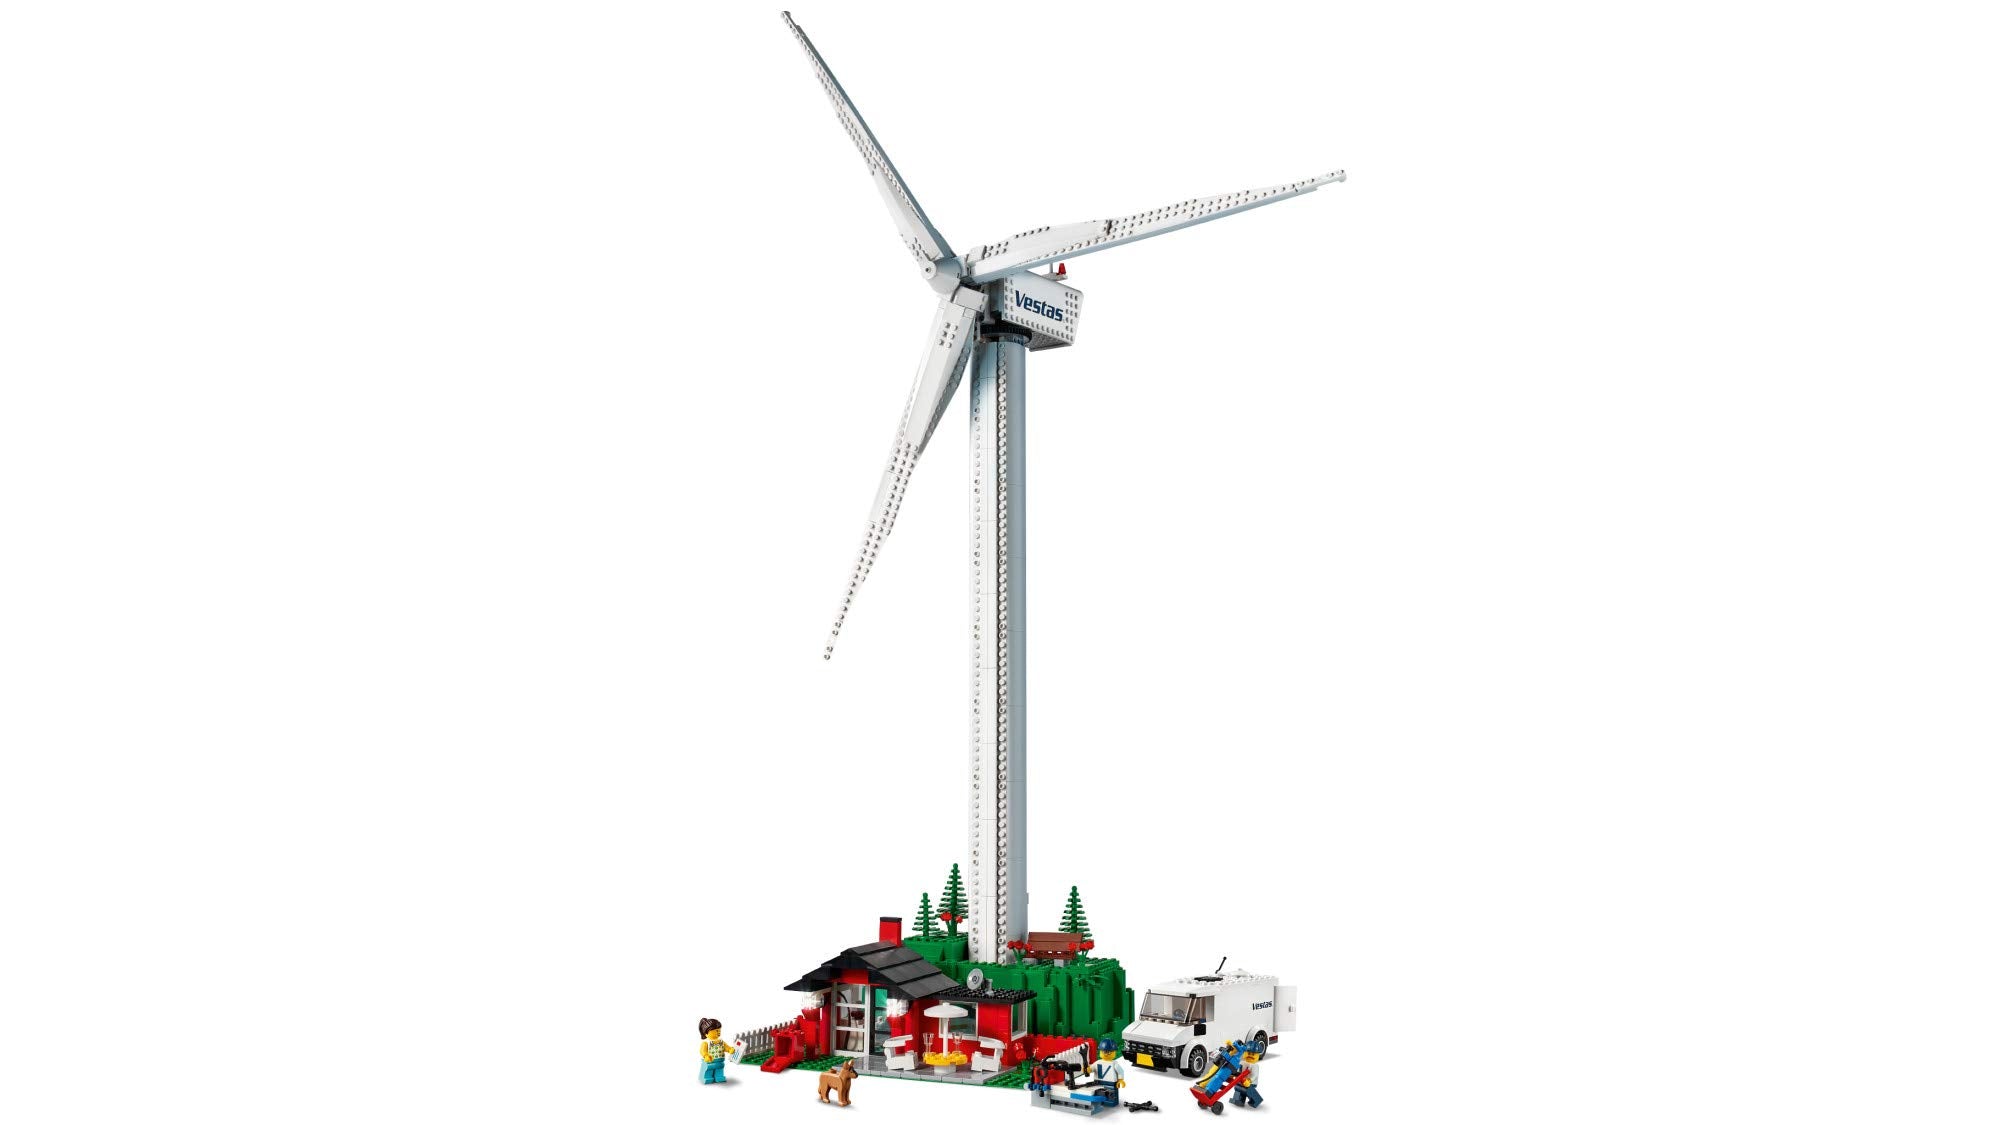 LEGO Creator Expert Vestas Wind Turbine 10268 Building Kit (826 Pieces)